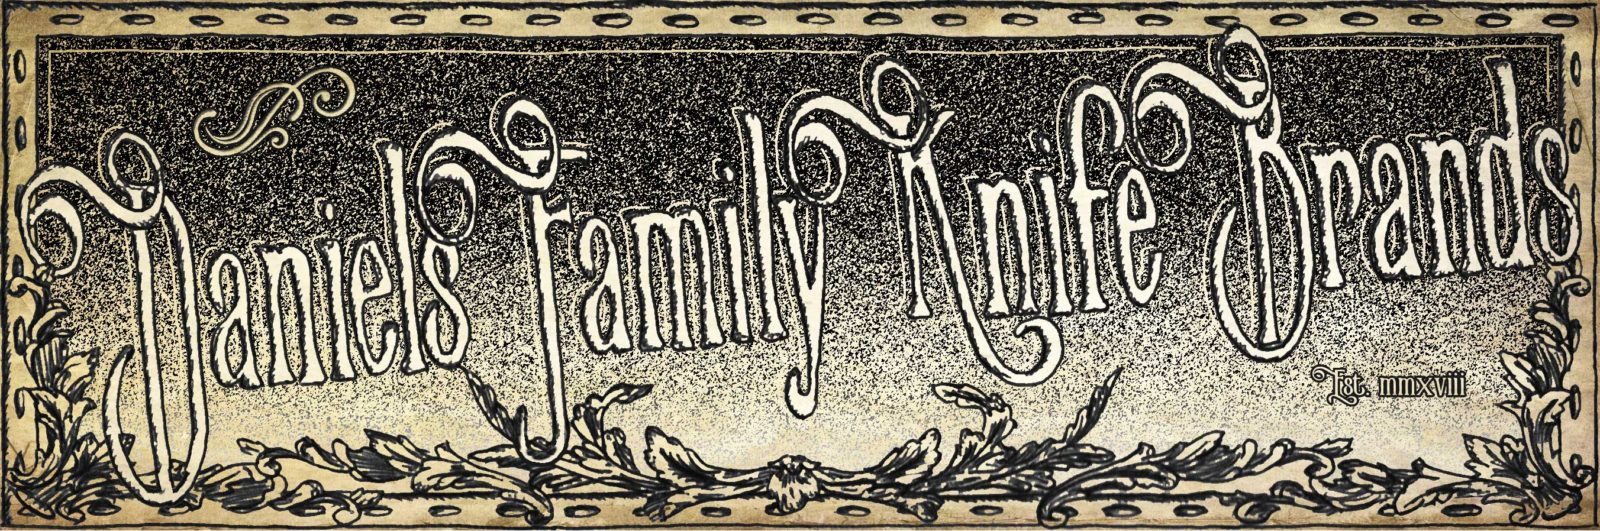 Daniels Family Knife Brands image